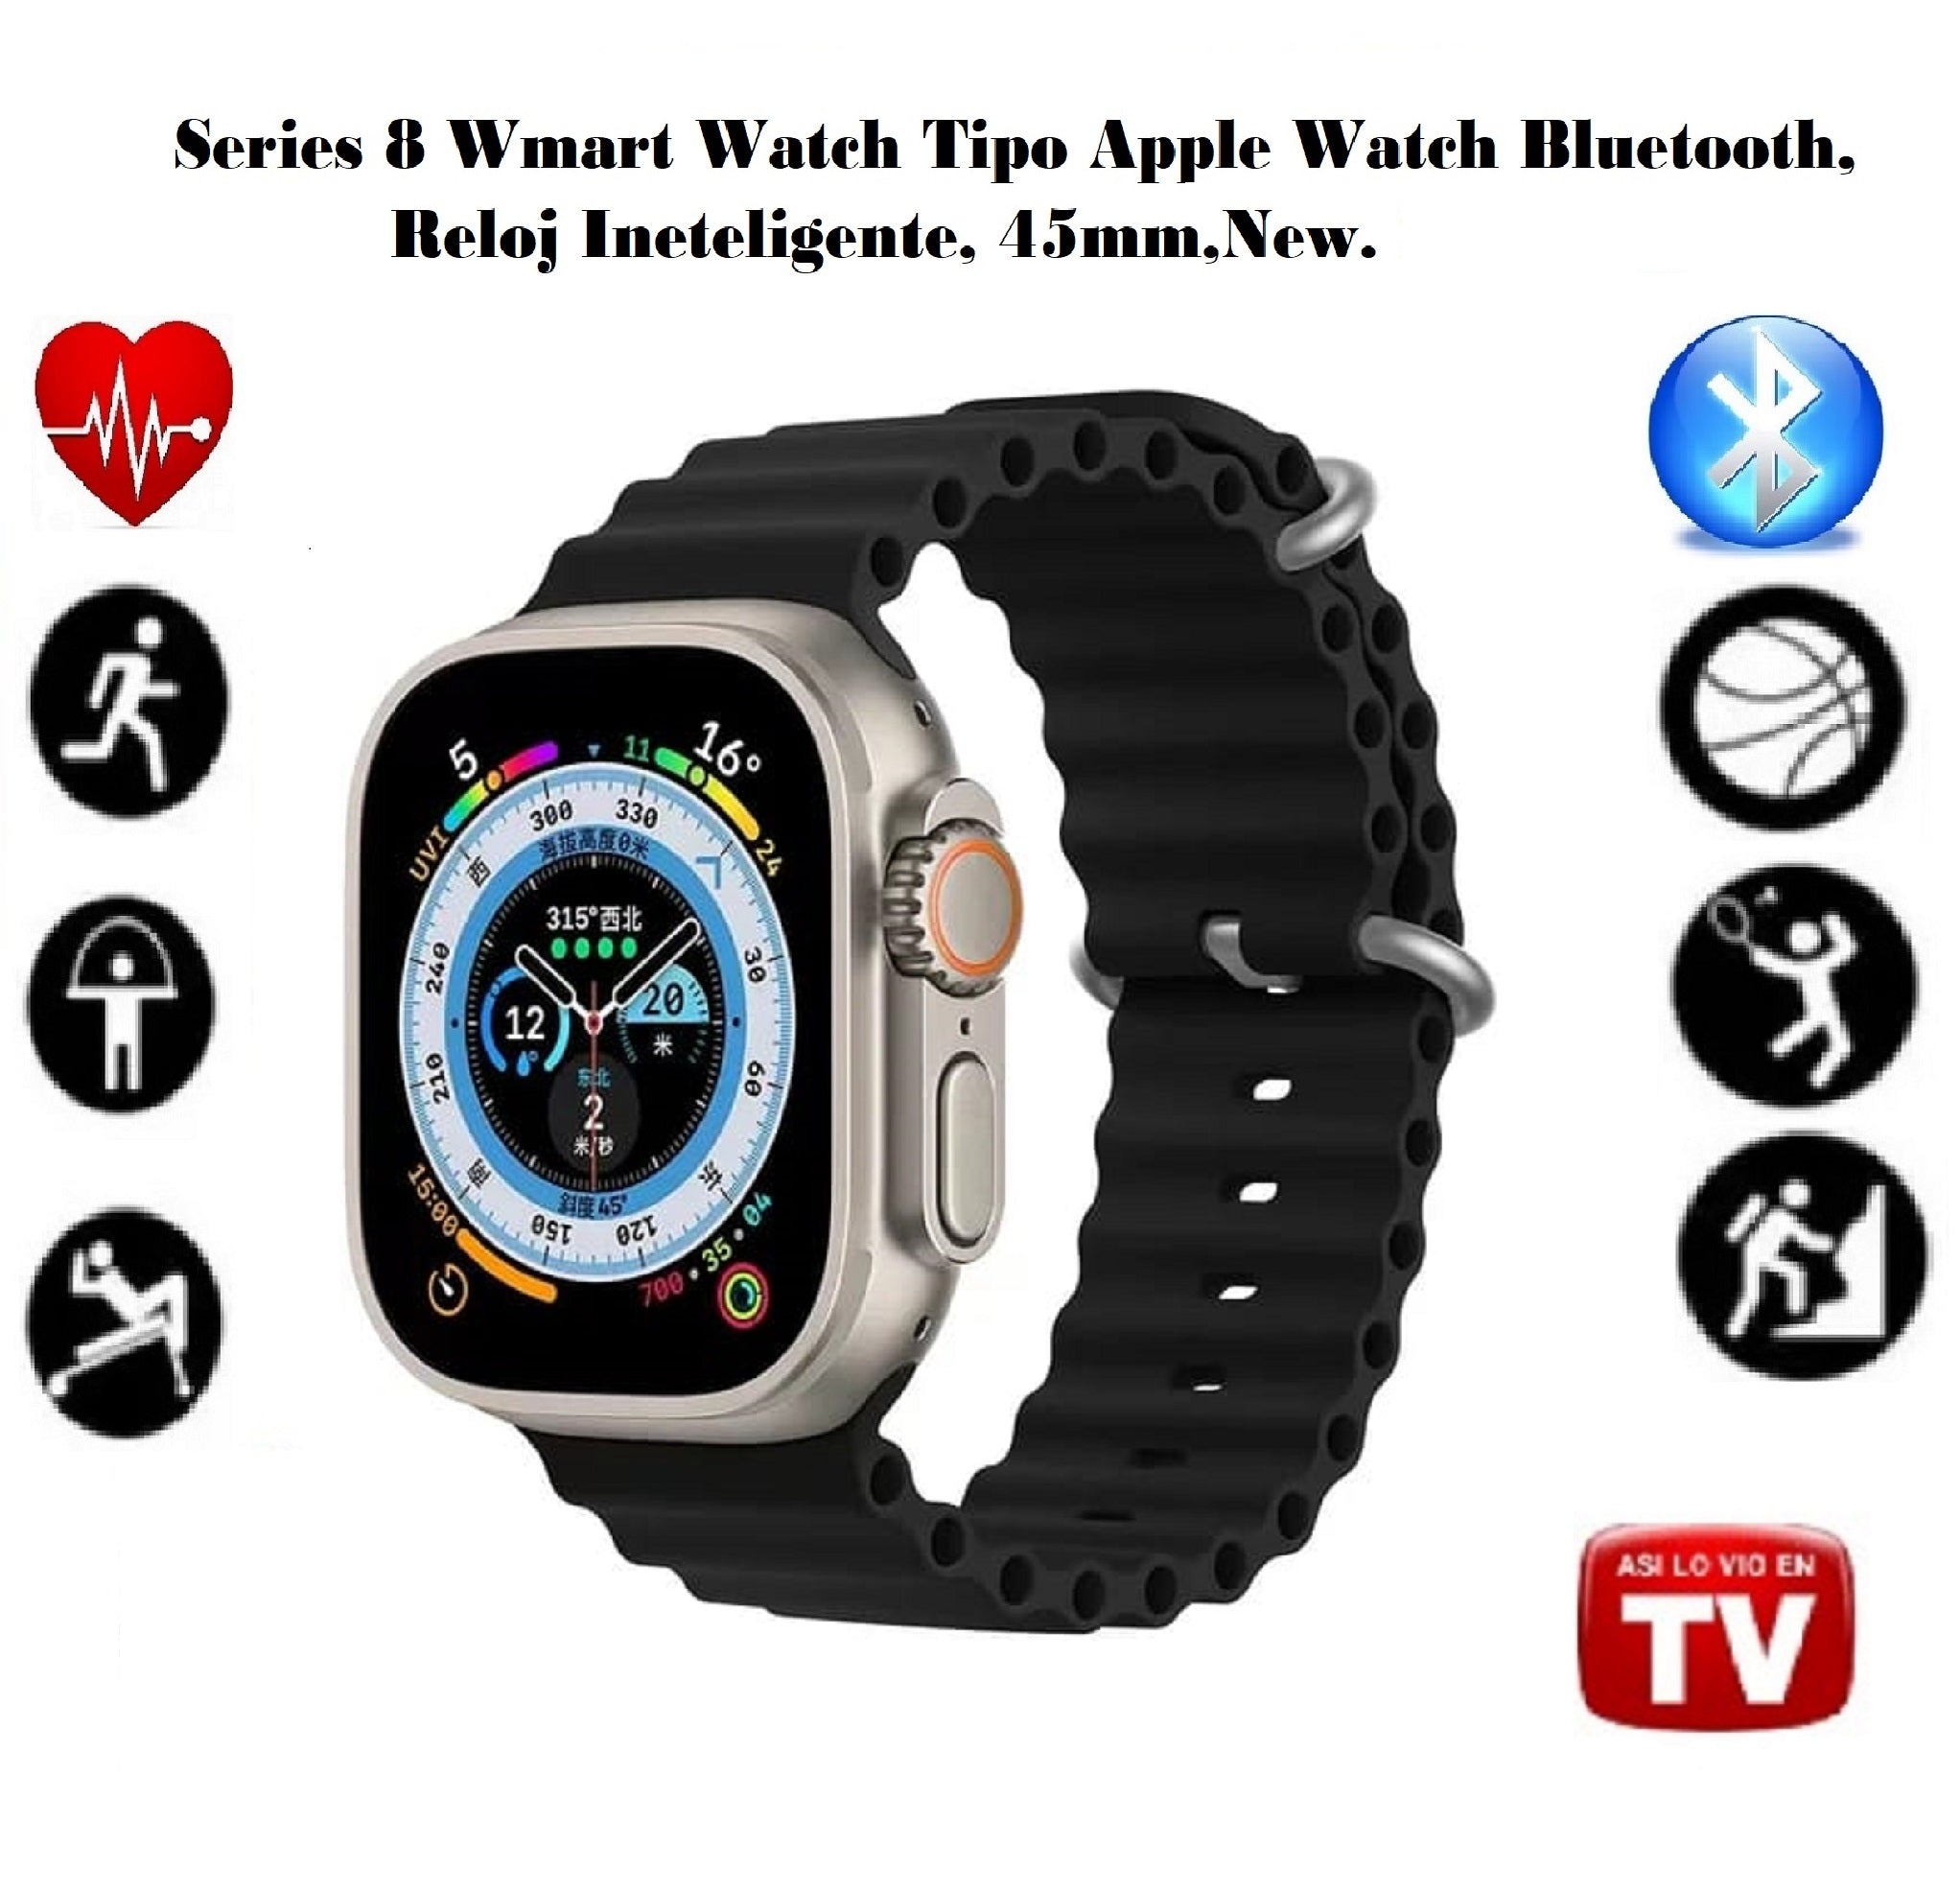 Series 8 Smart Watch Tipo Apple Watch Bluetooth, Reloj Inteligente, 45mm, New. 2024, Colors